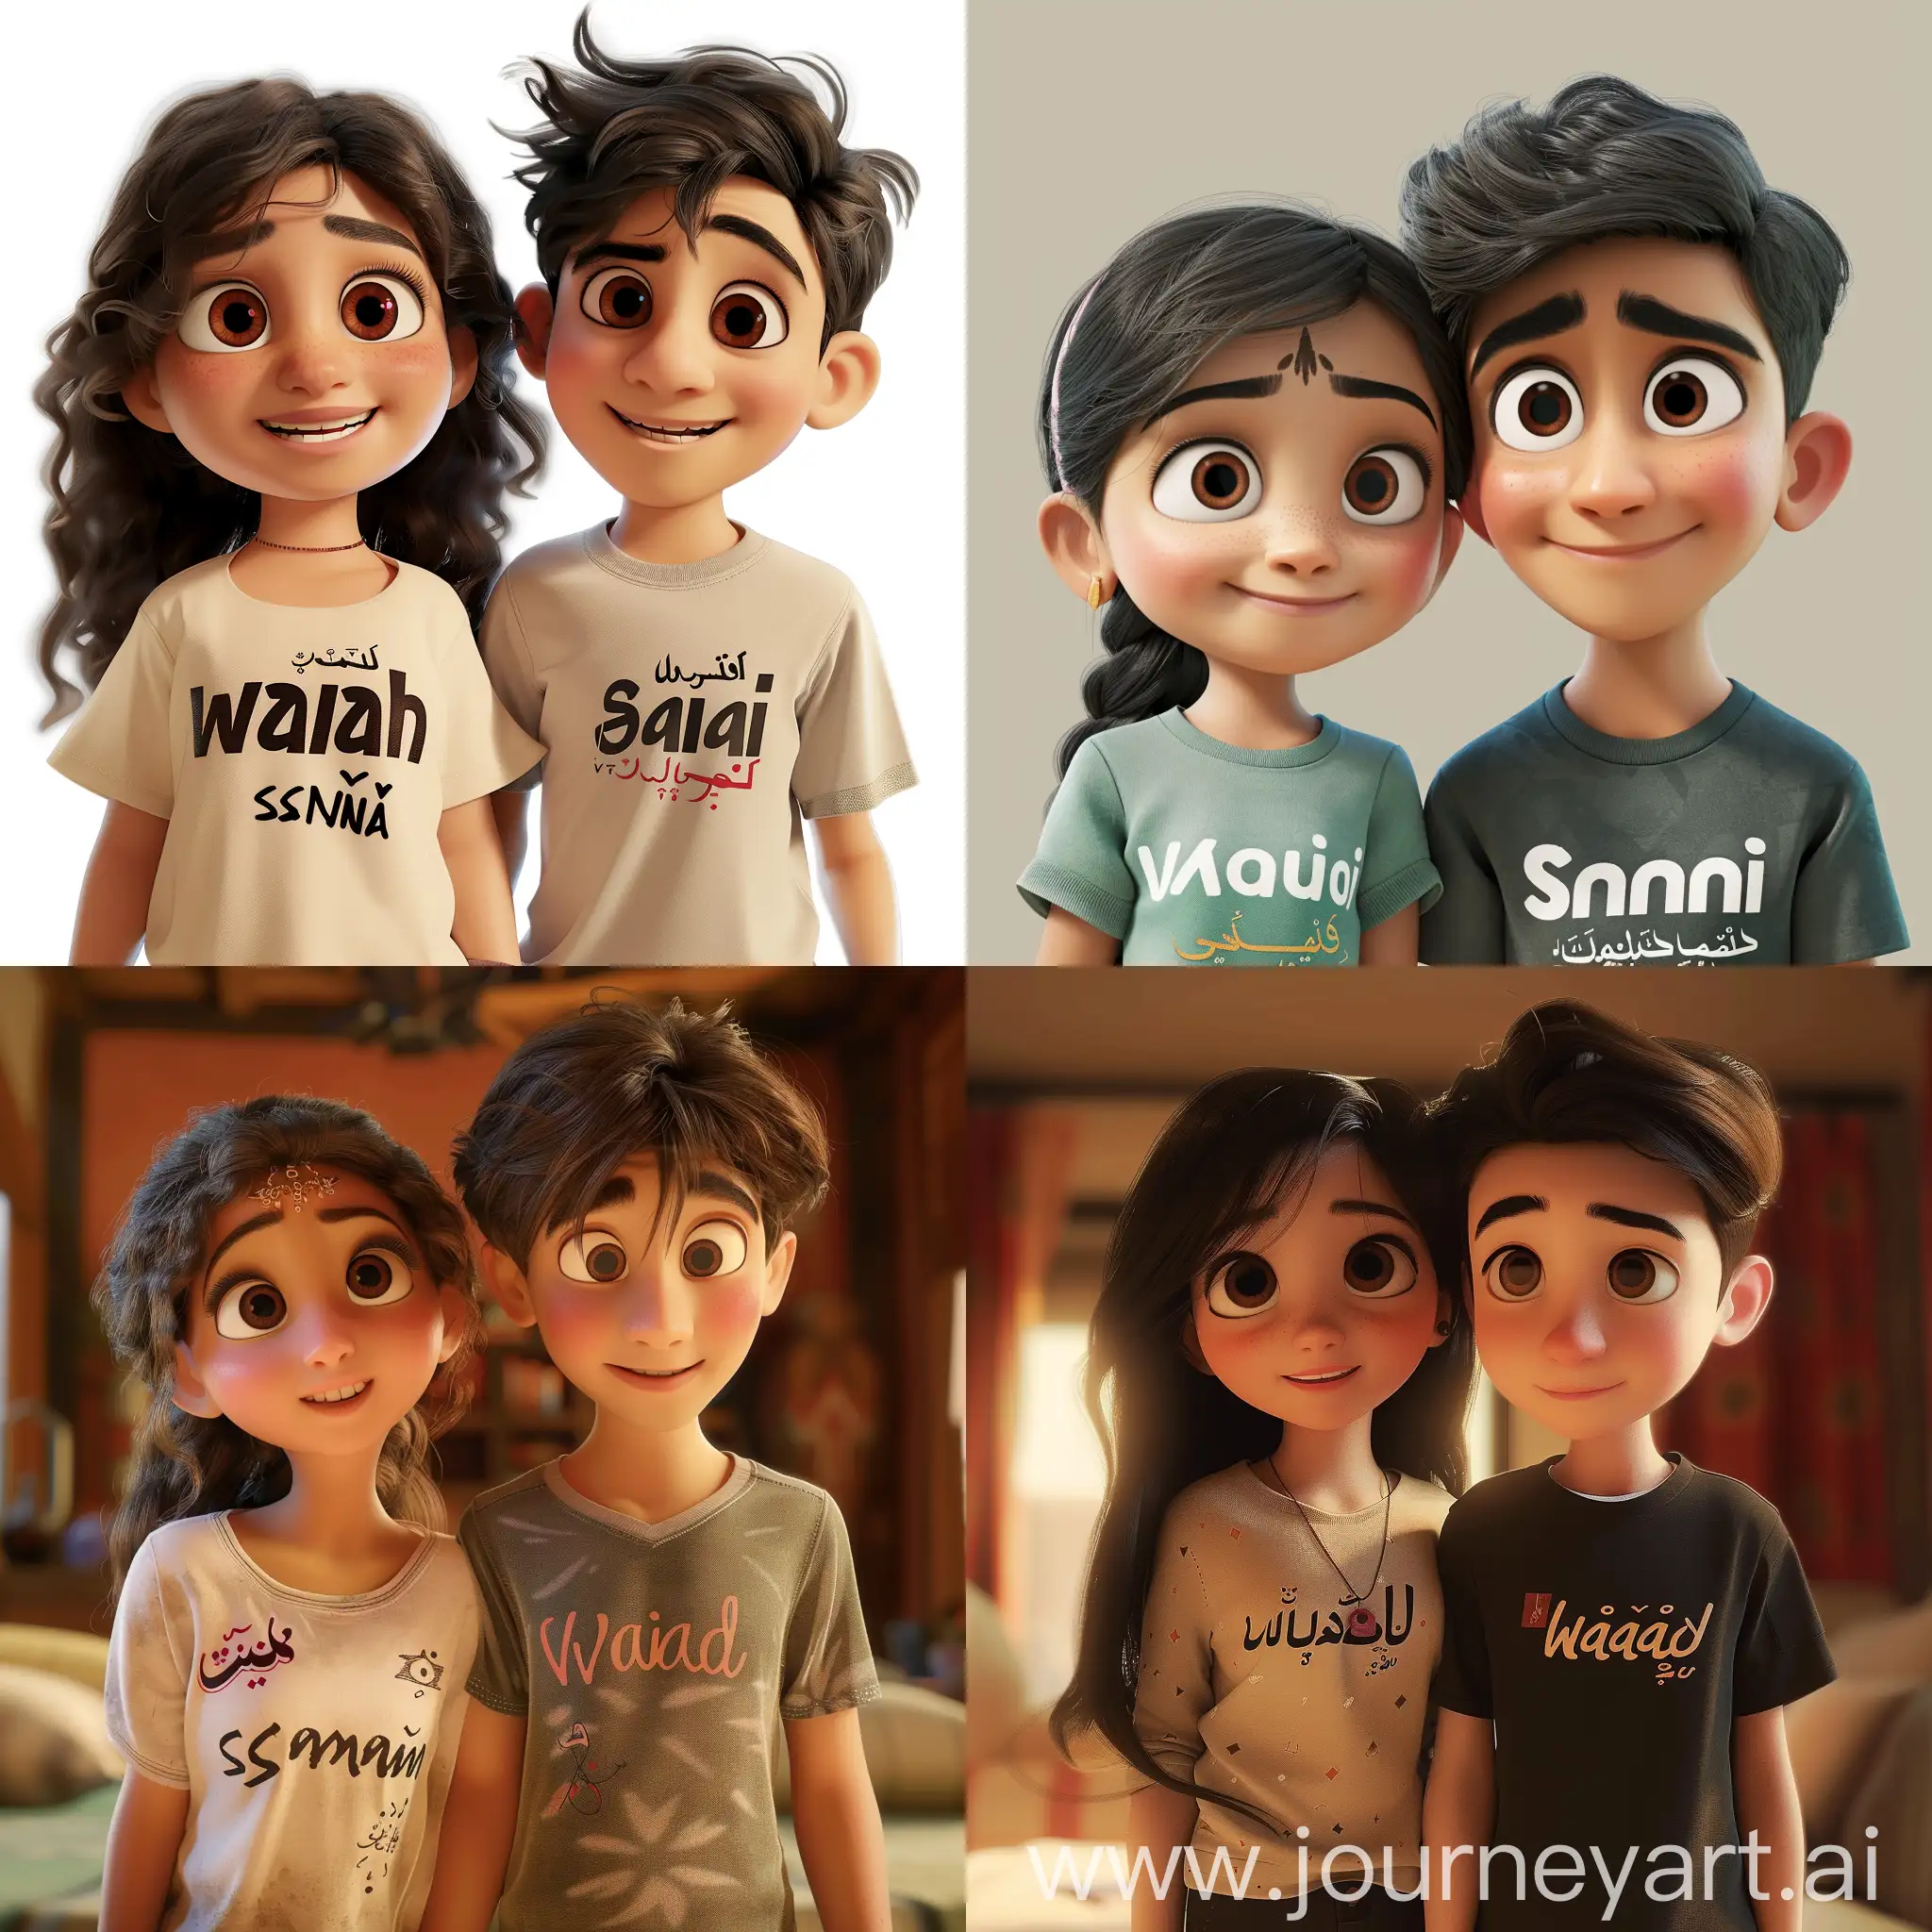 Adorable-Awais-and-Sania-Couple-in-PixarStyle-Harmony